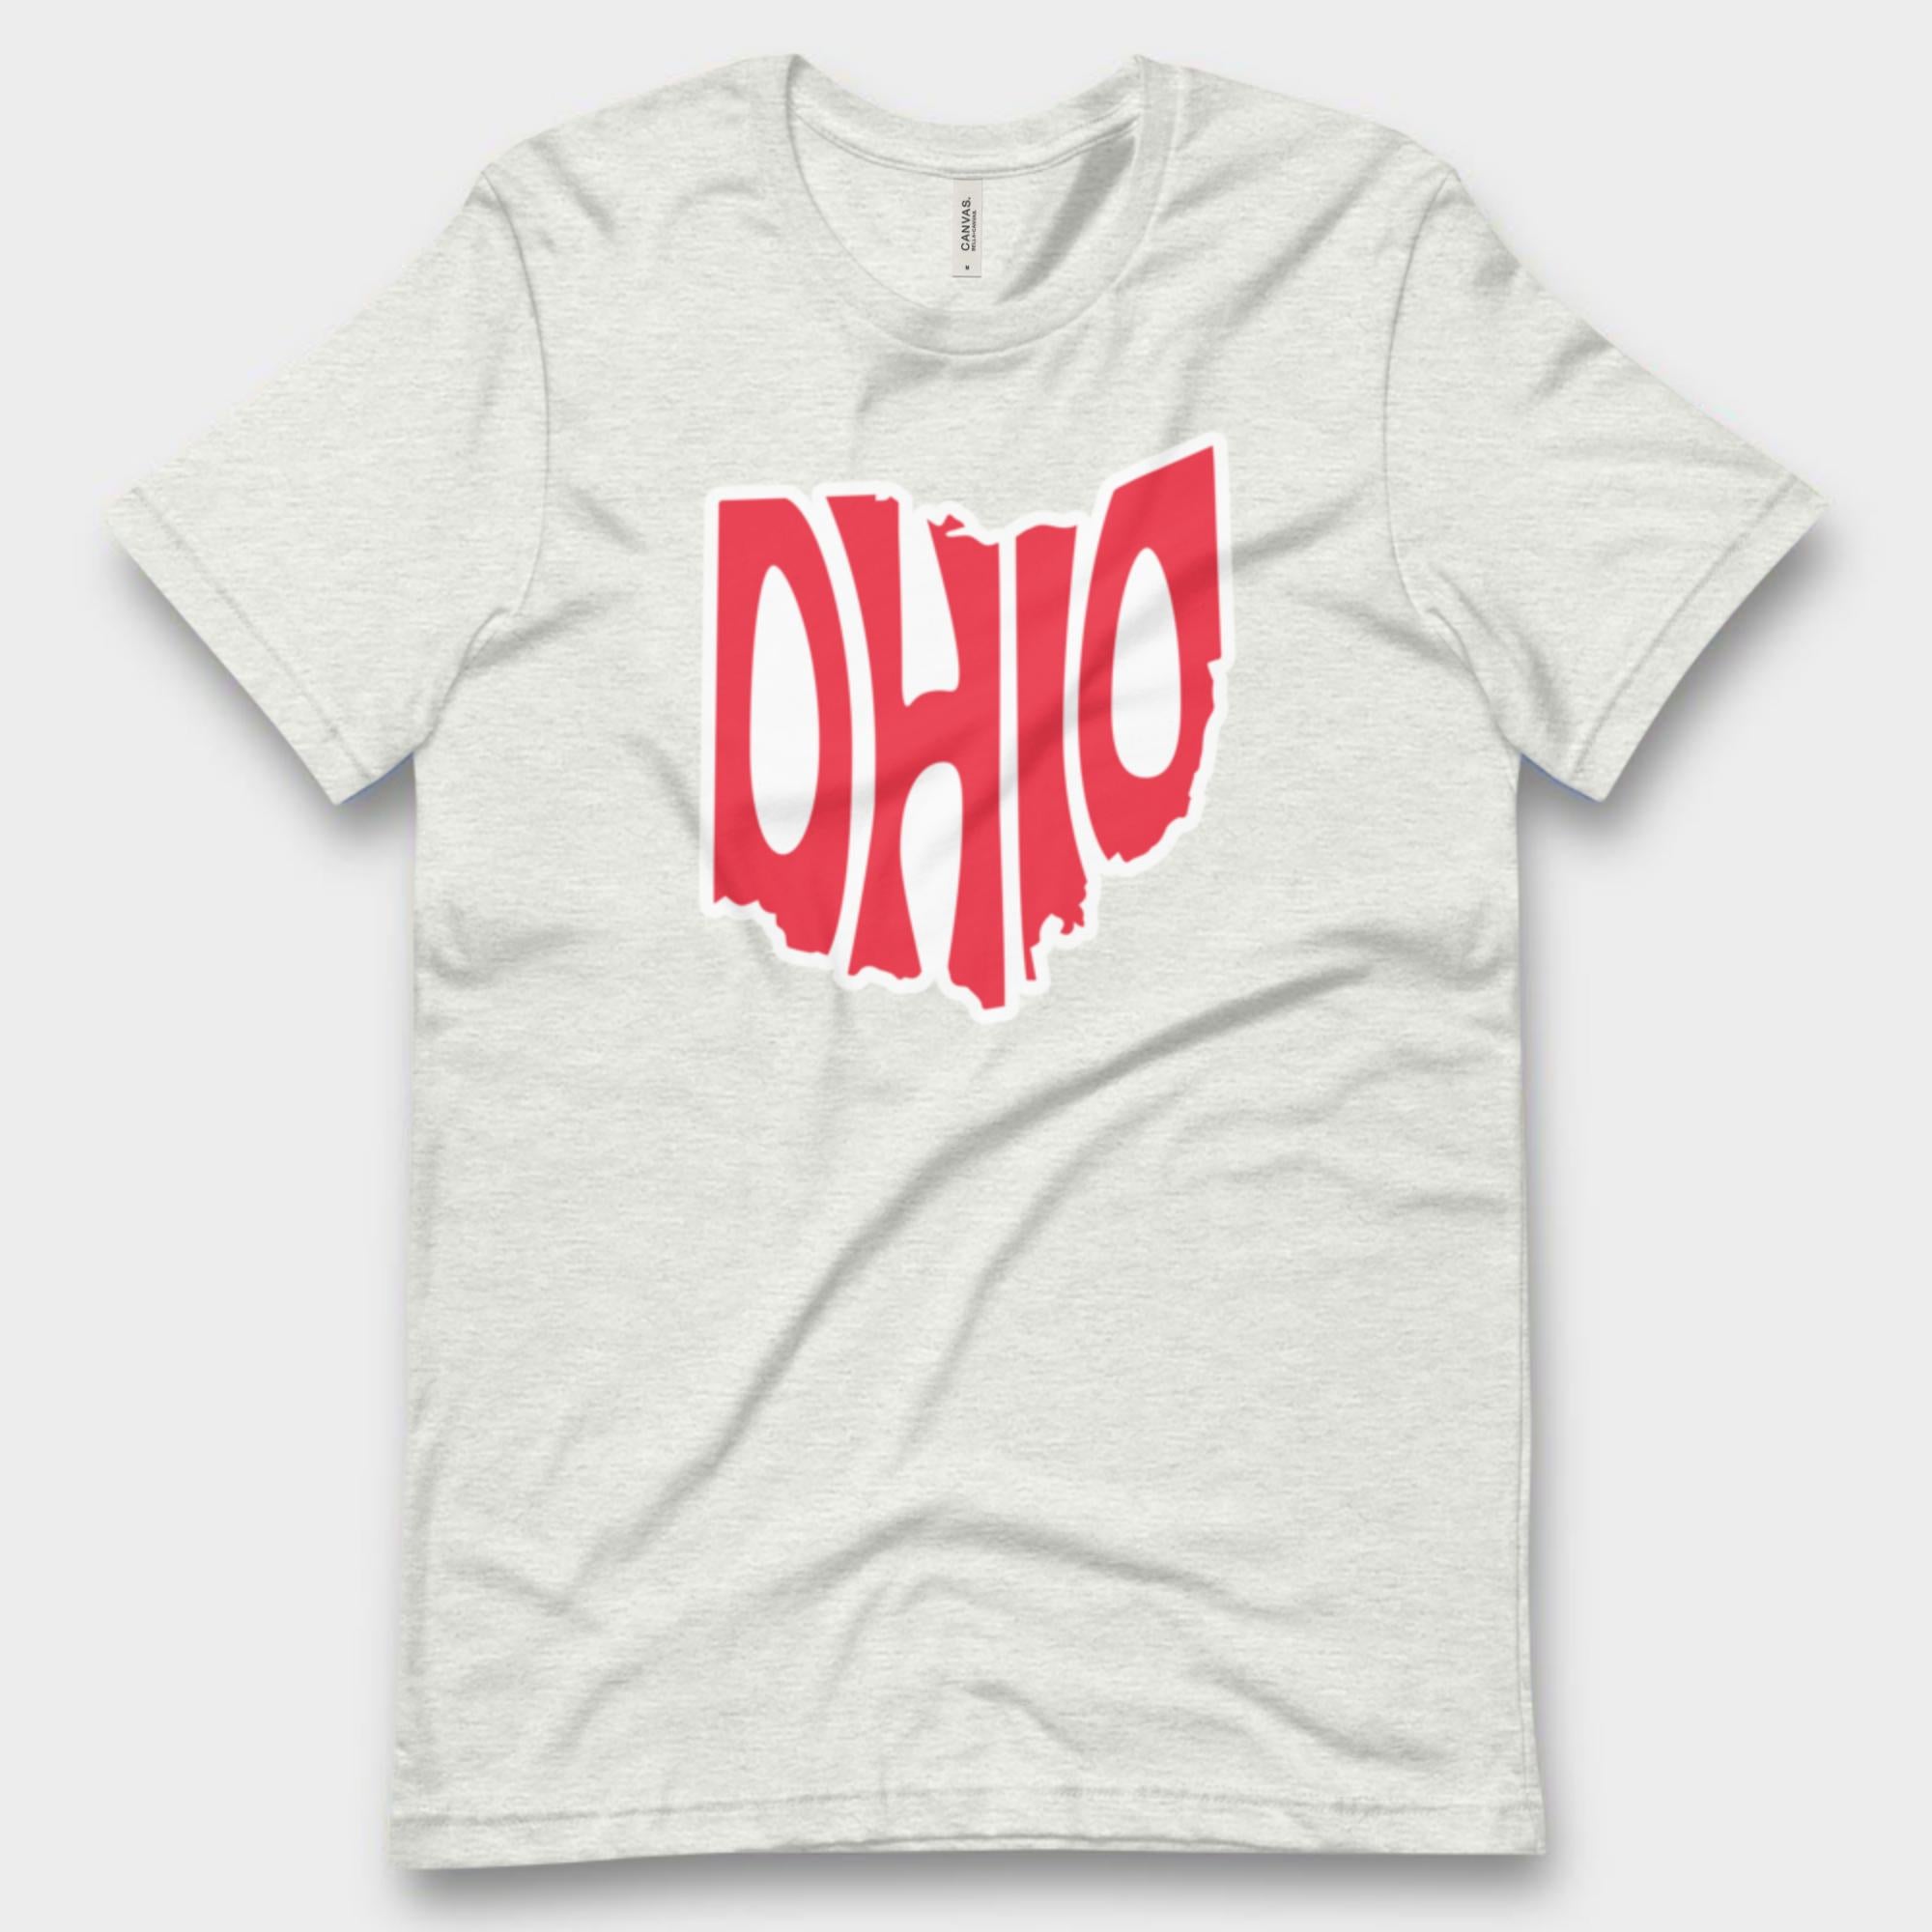 "Ohio" Tee